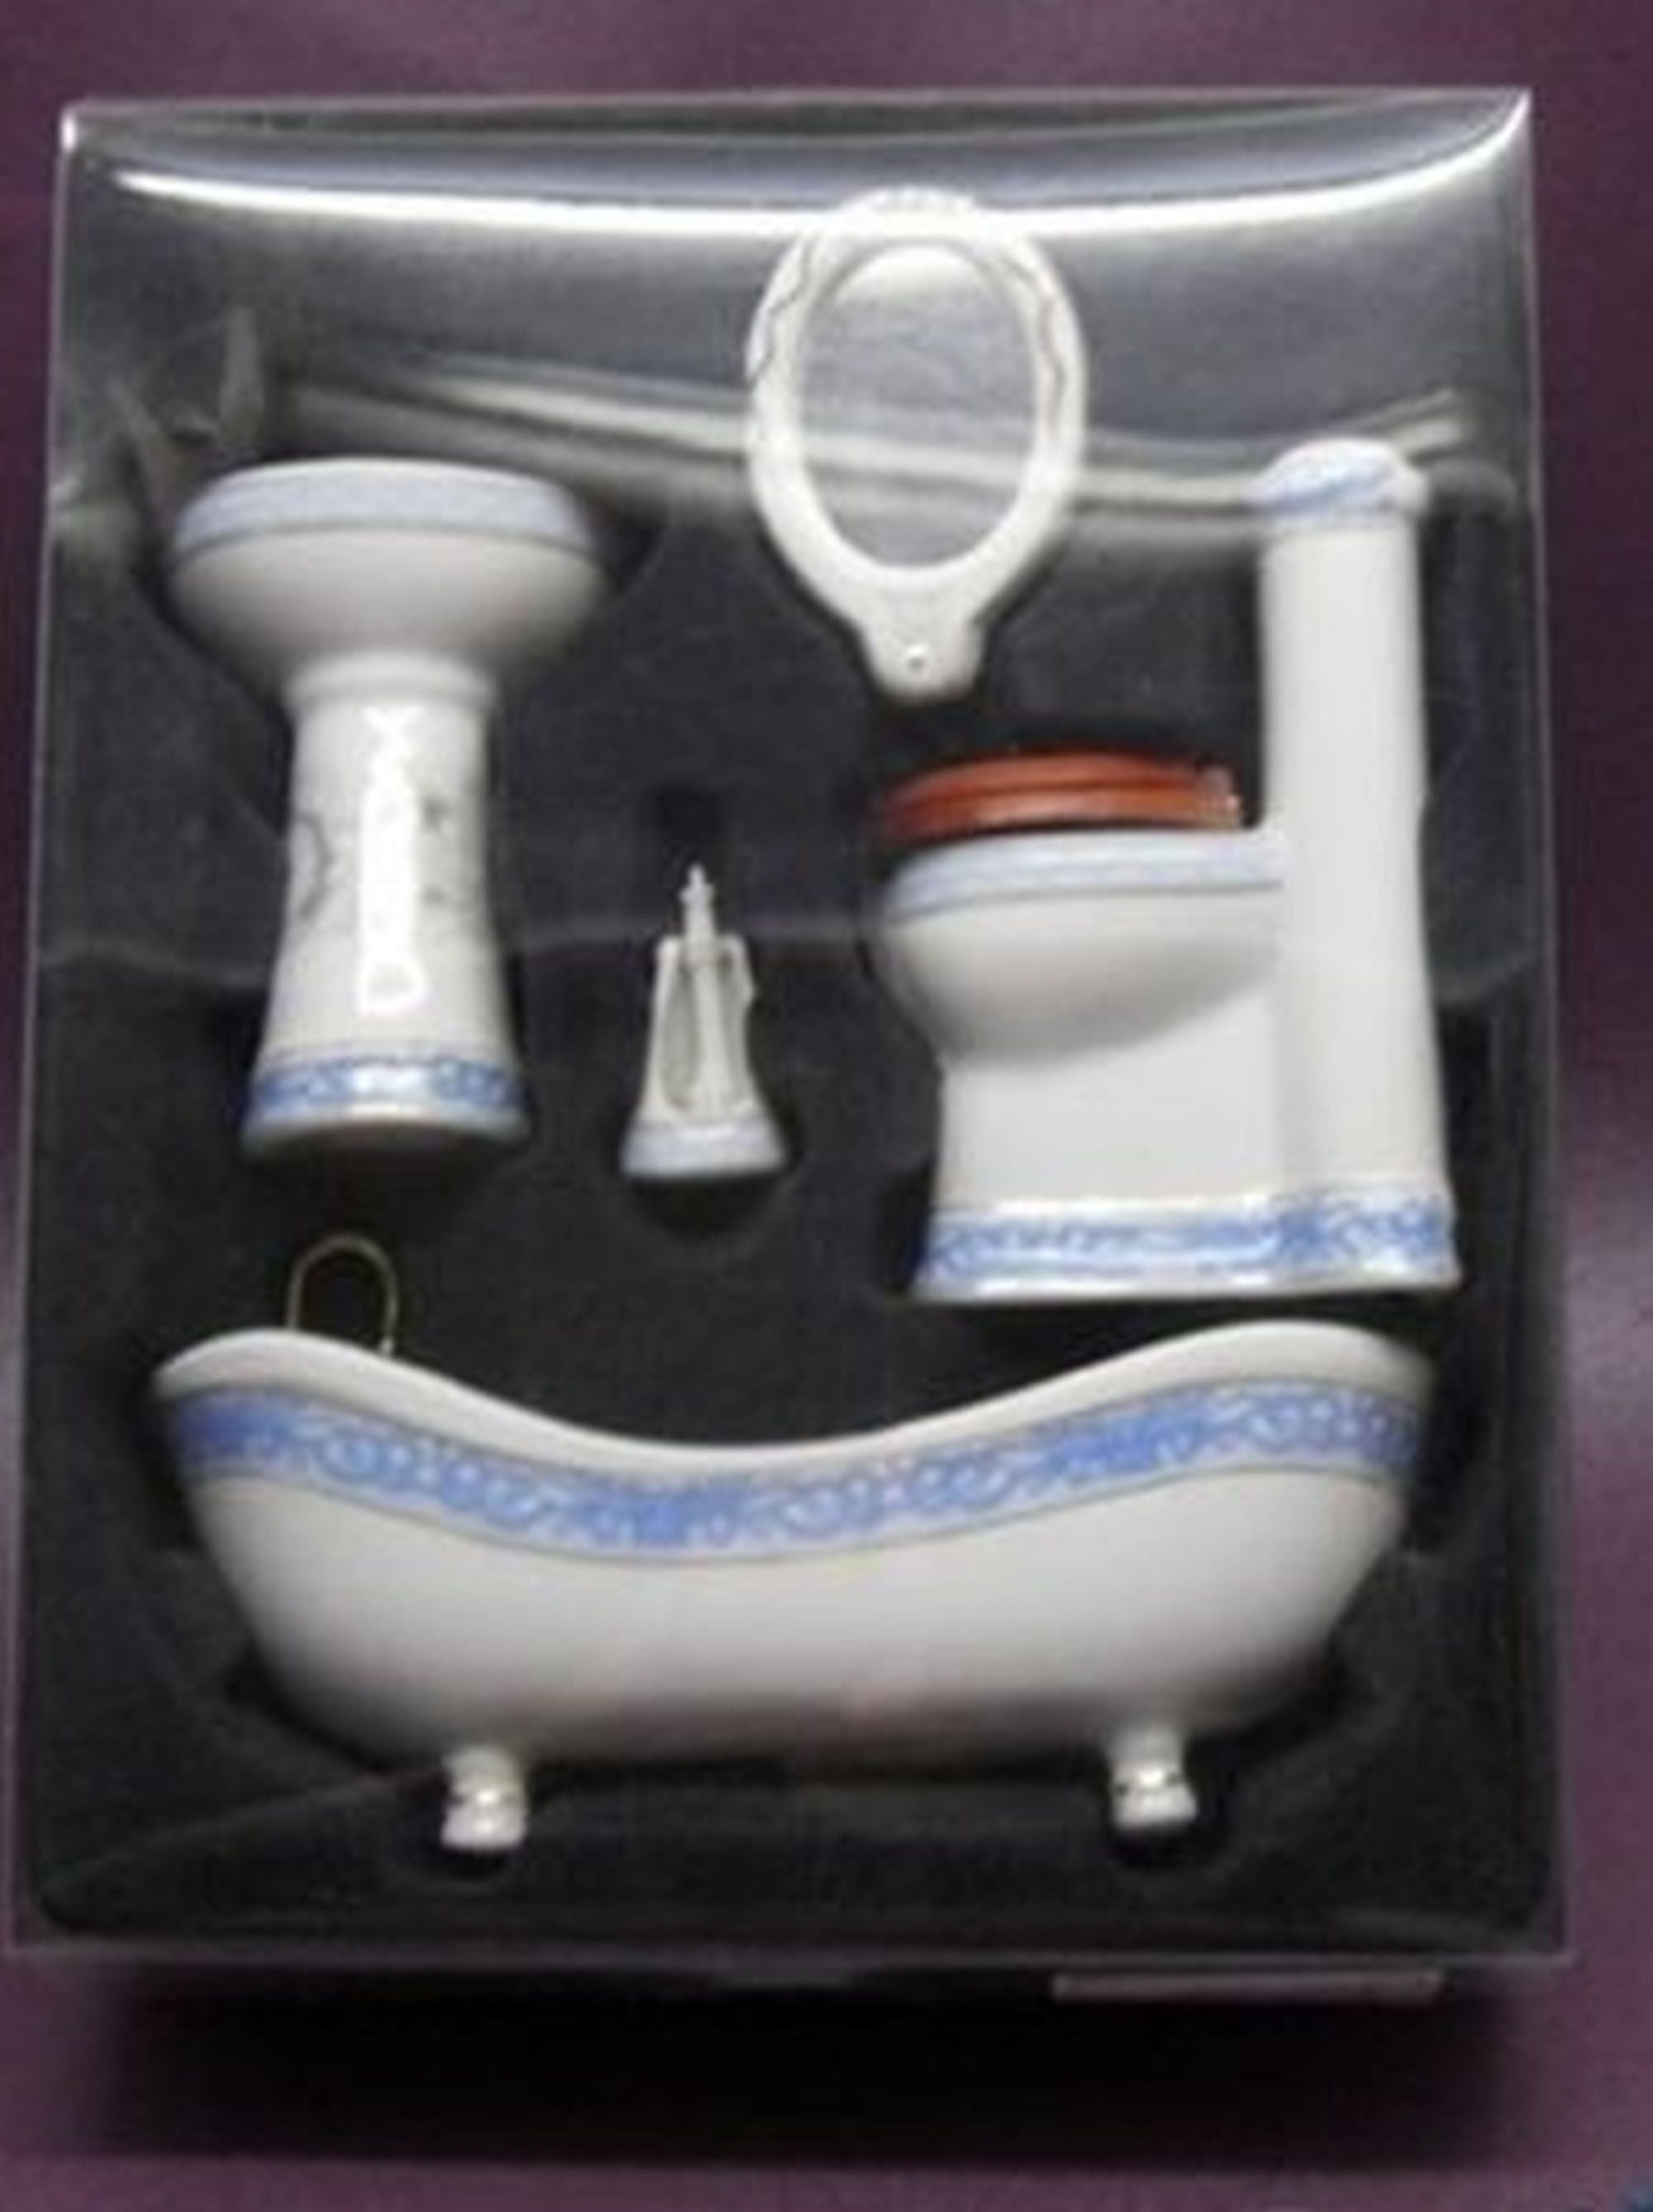 Miniature 5pc White and Blue Bathroom Set for Dollhouses [MJD 3353